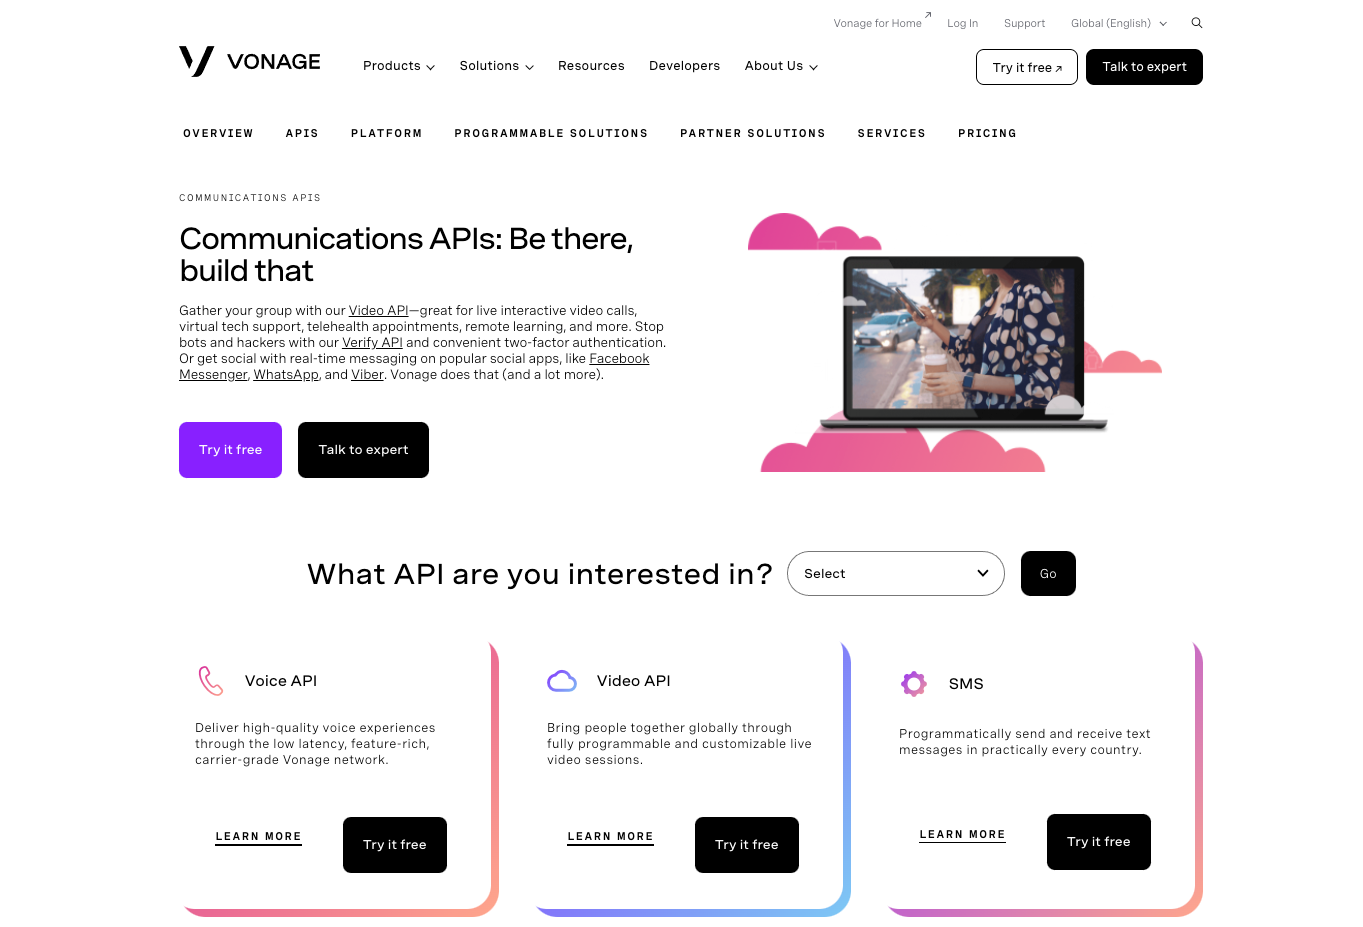 Vonage Communication APIs